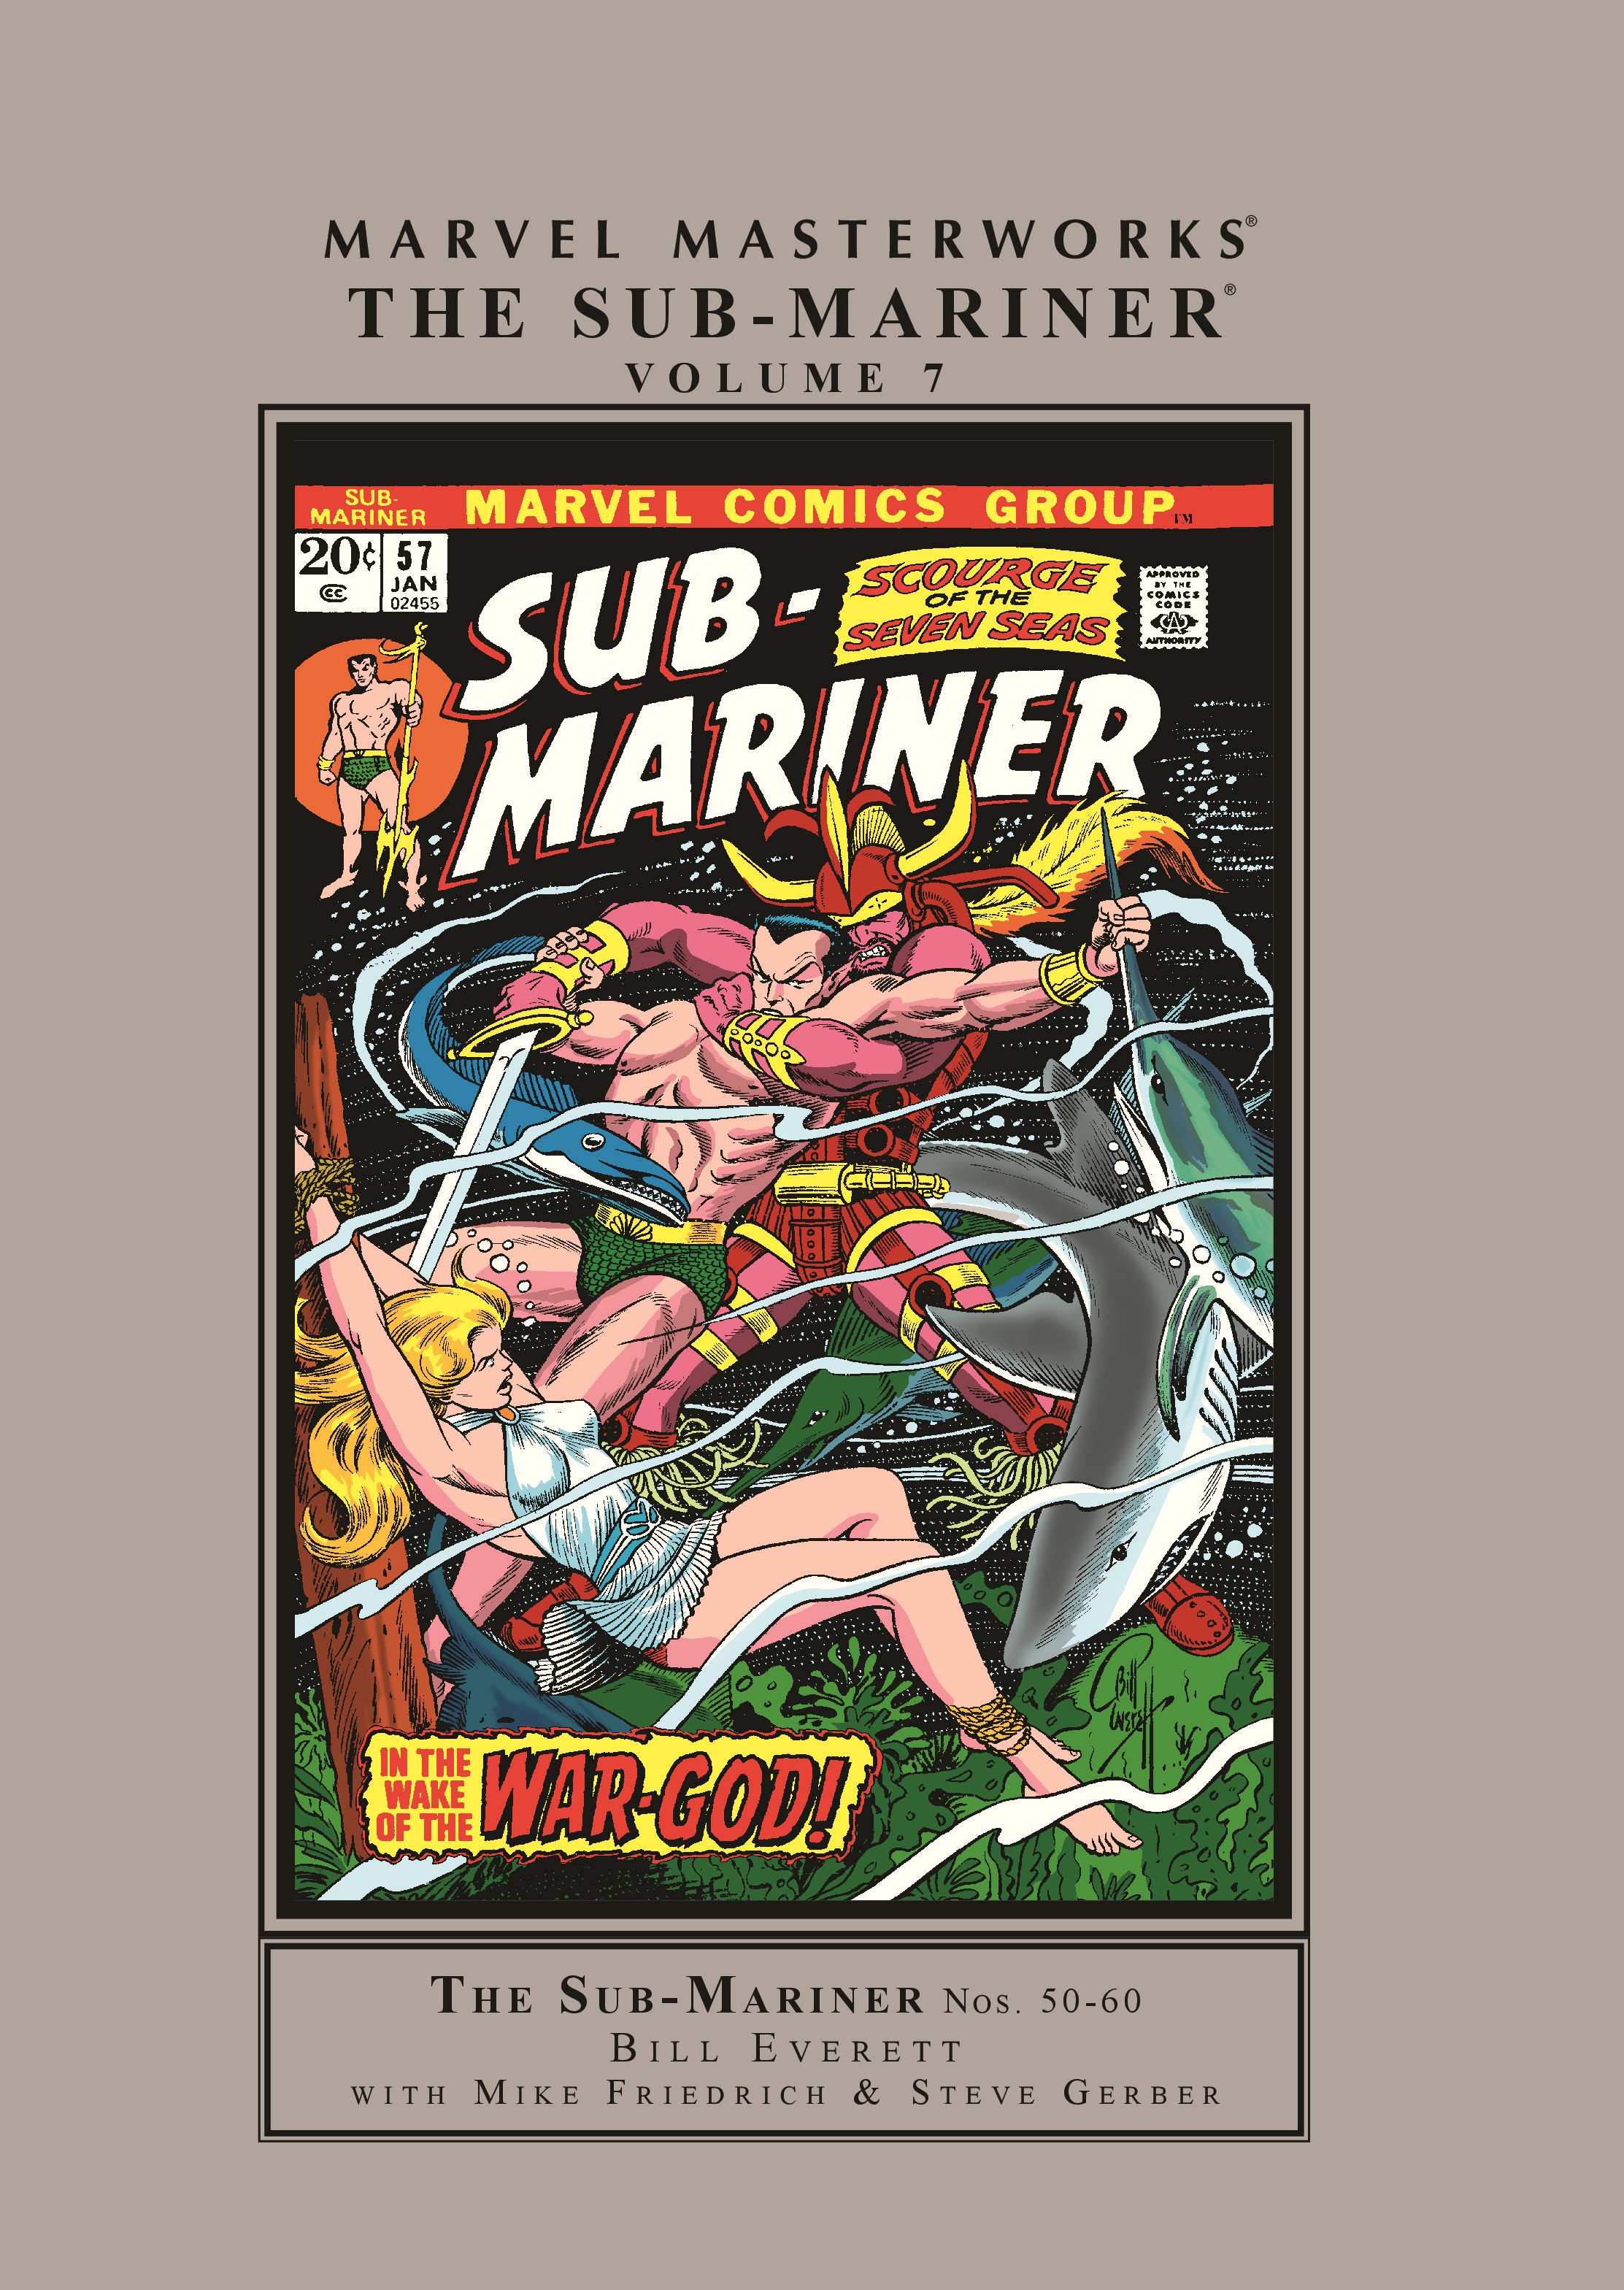 MARVEL MASTERWORKS: THE SUB-MARINER VOL. 7 HC (Hardcover)